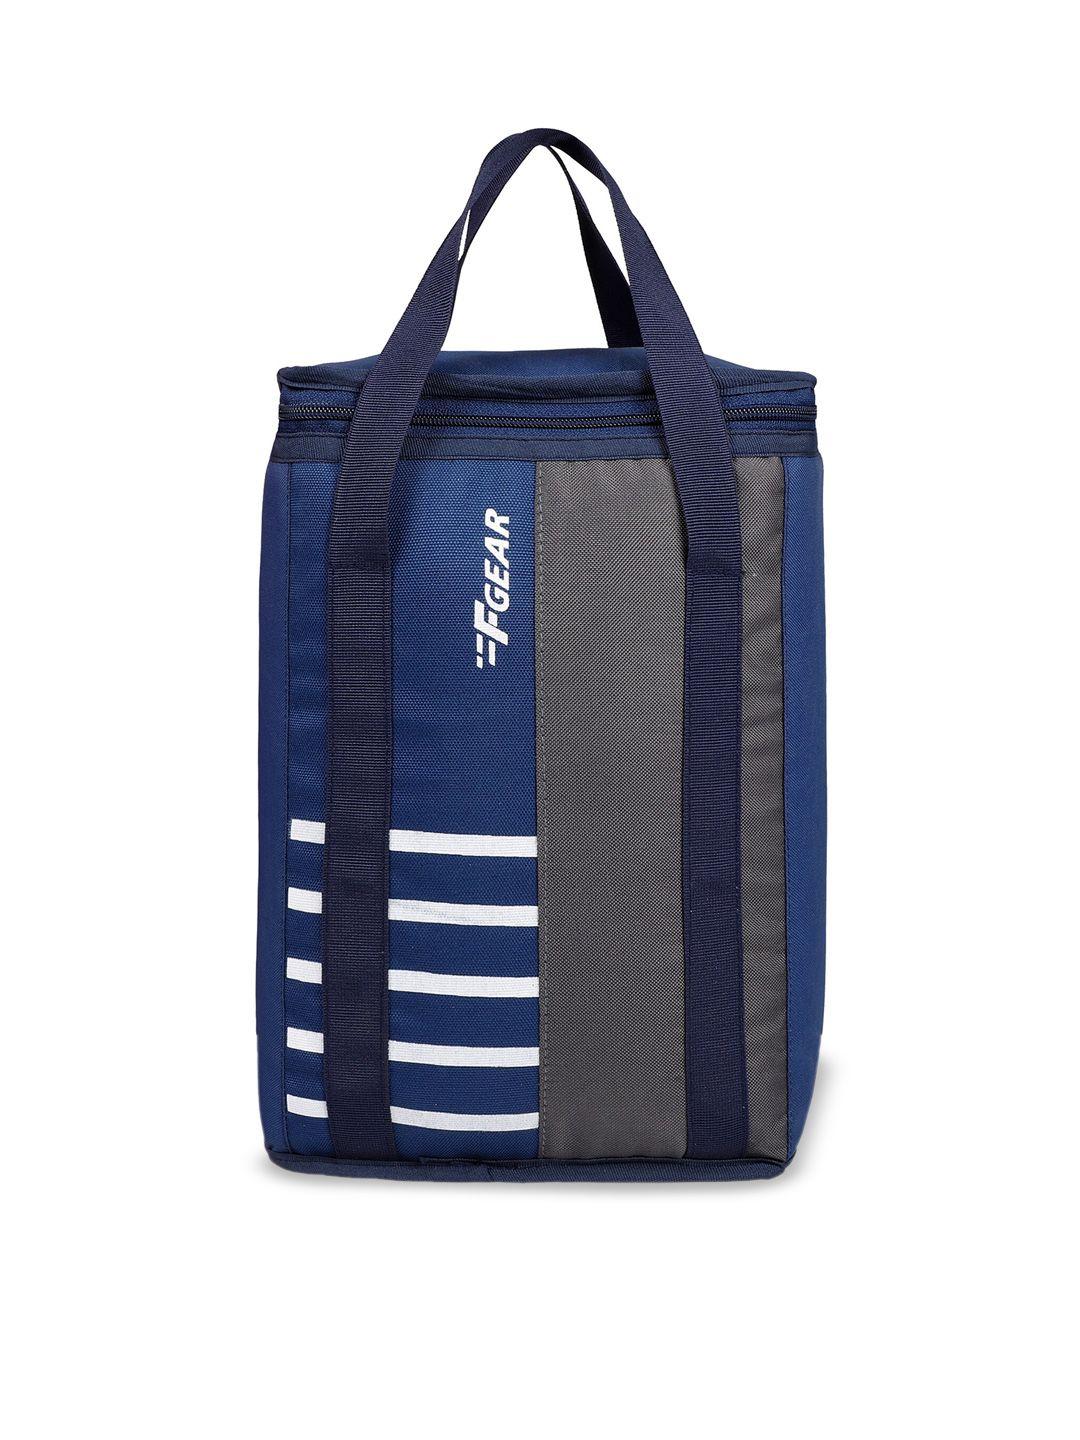 f gear grey & navy blue colourblocked lunch bag